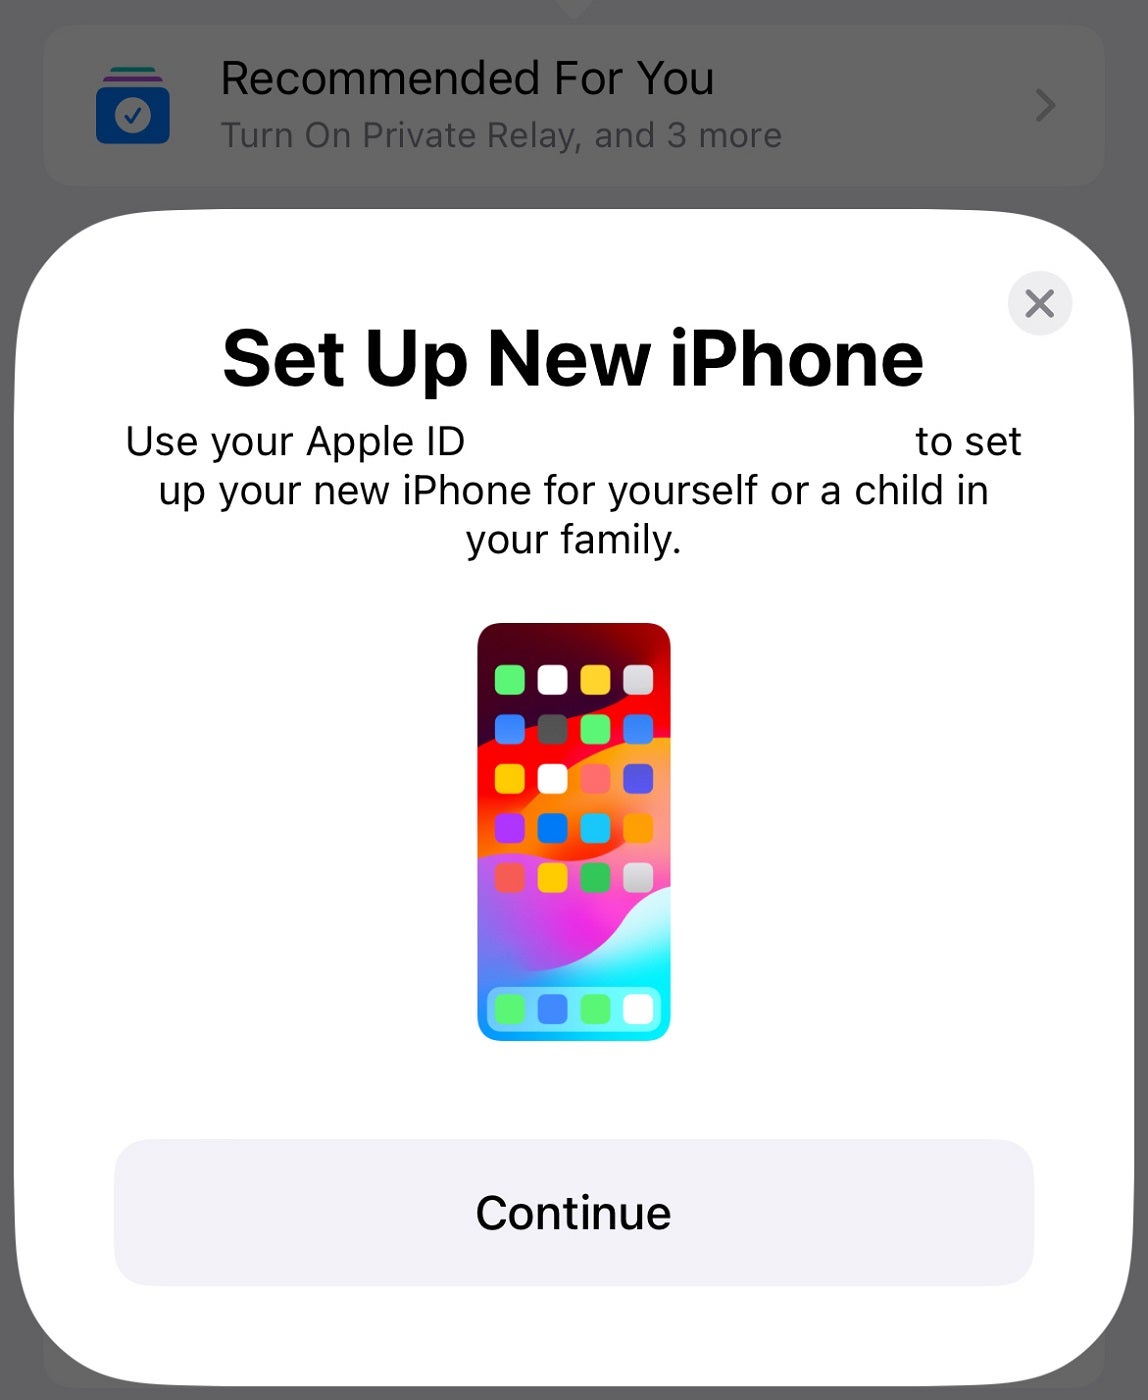 New iPhone setup using Apple ID.